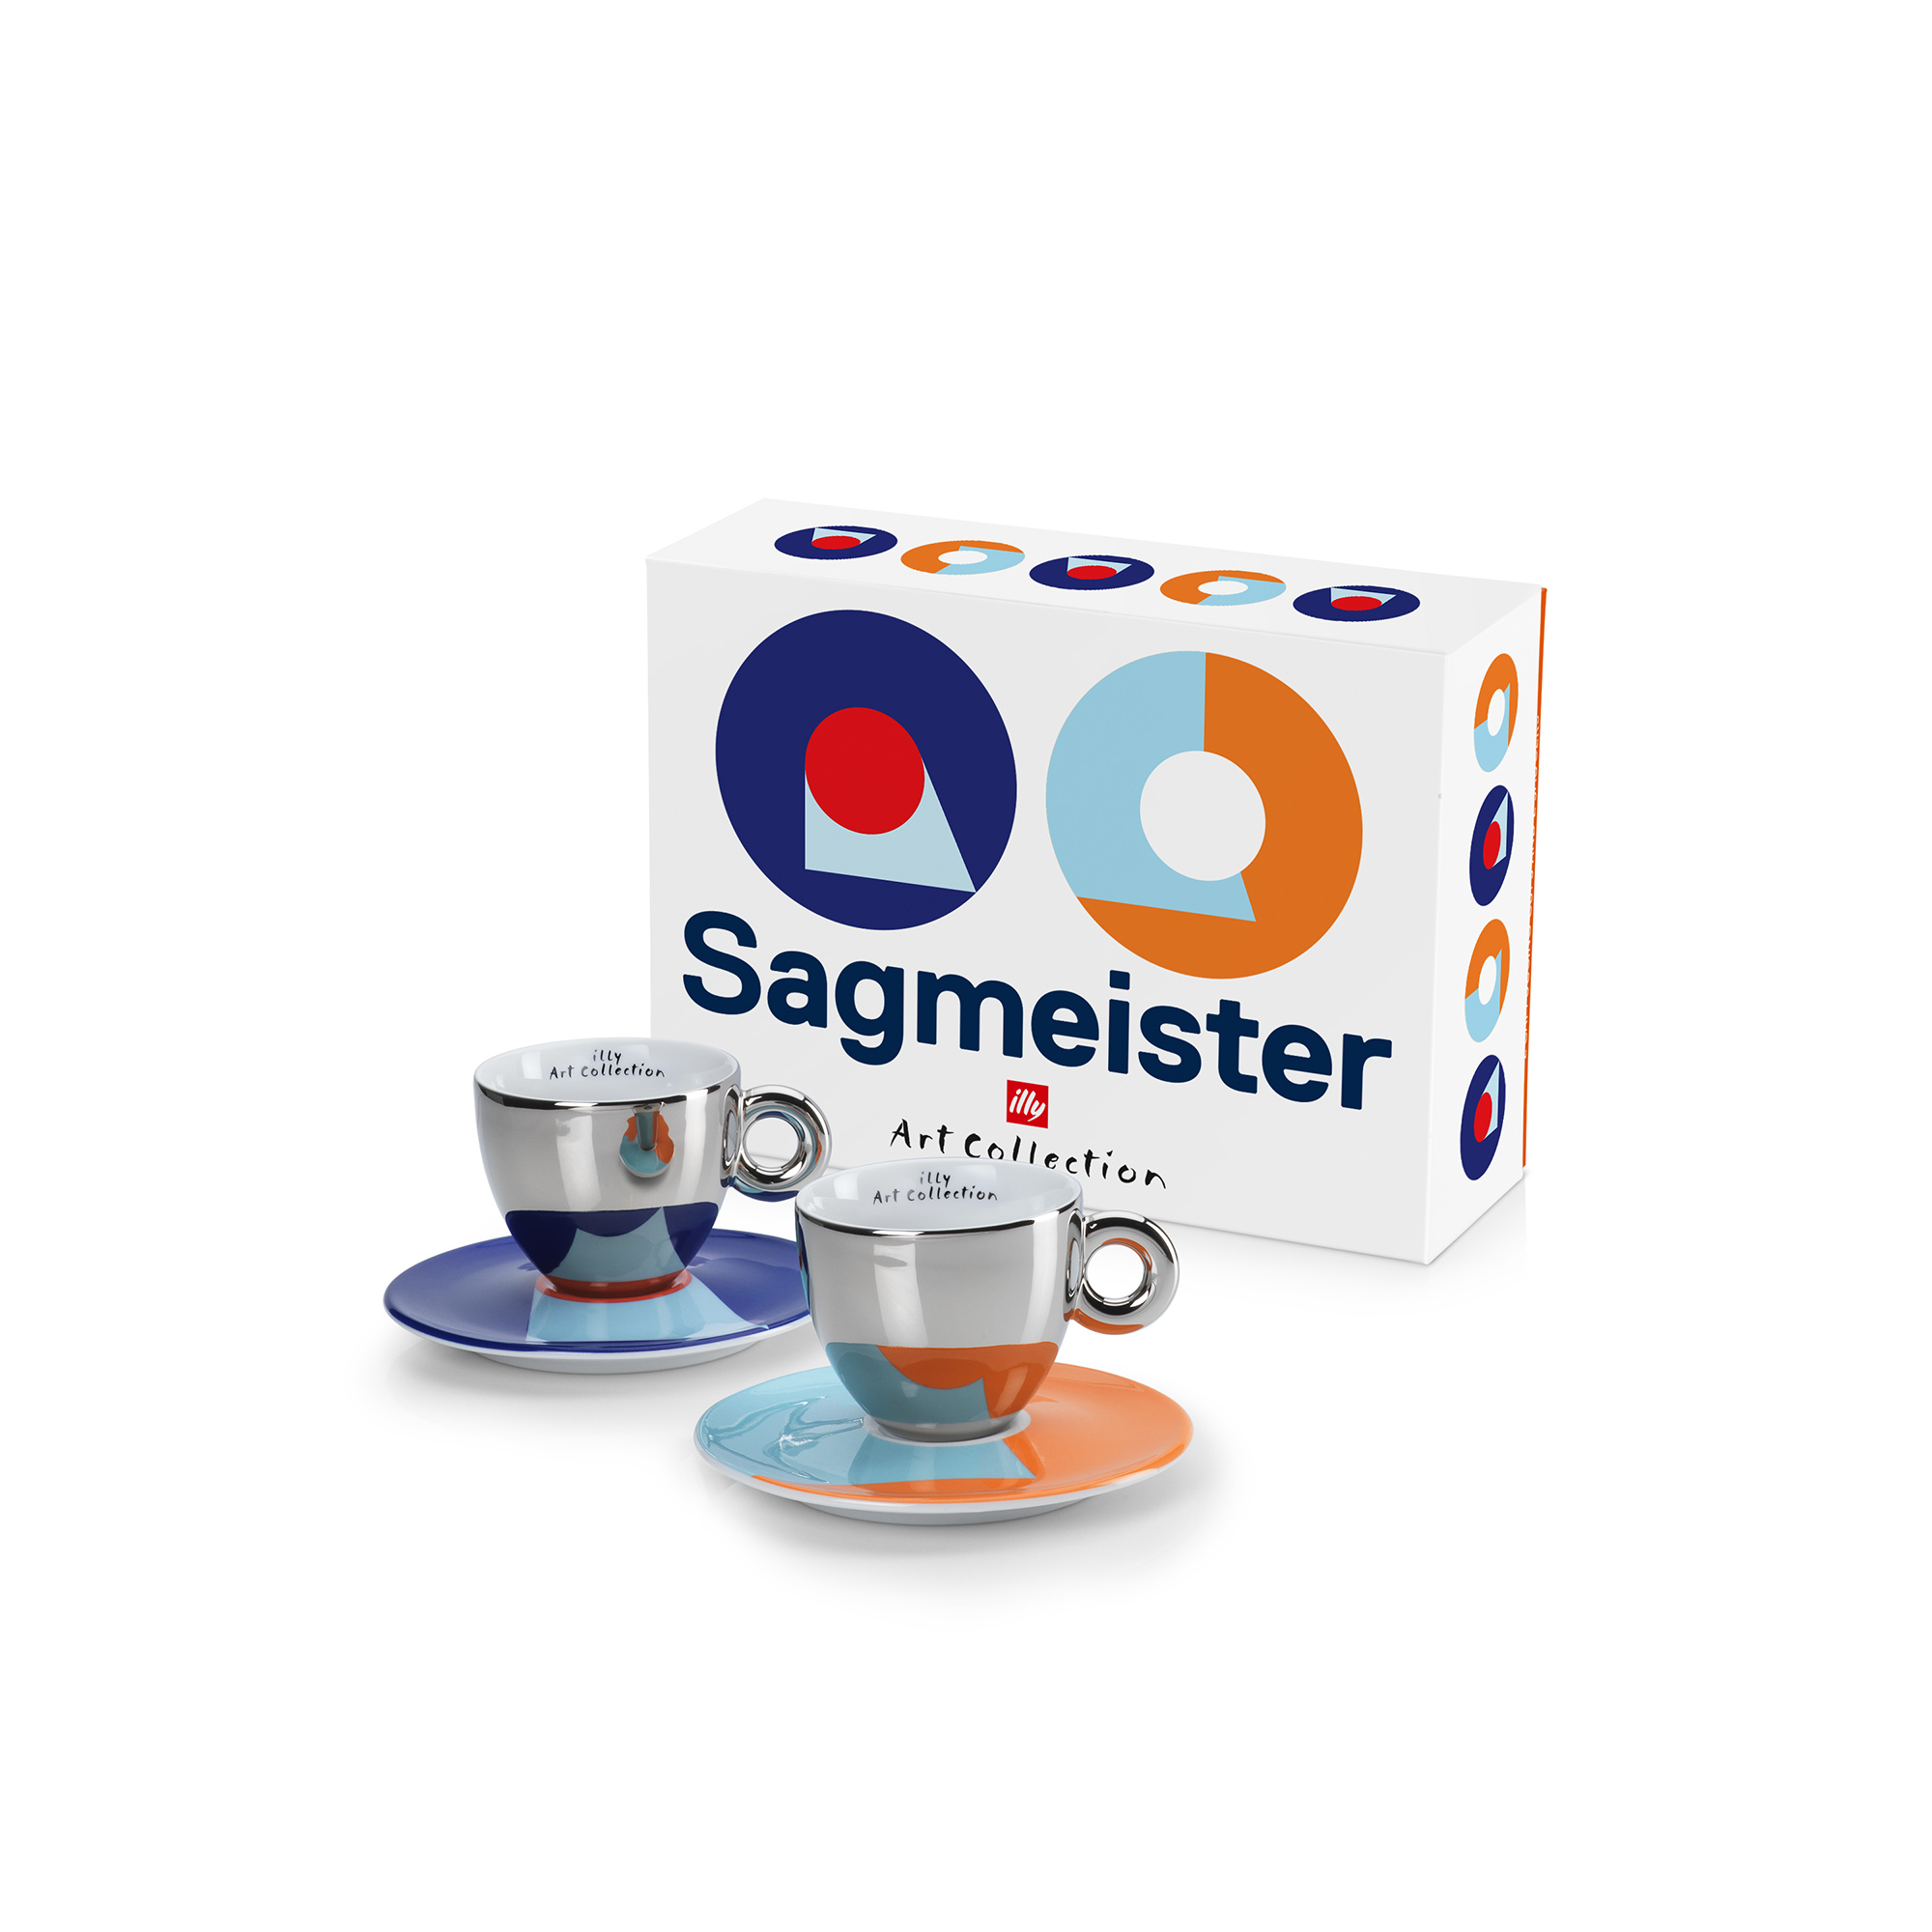 illy espresso cups – Stefan Sagmeister